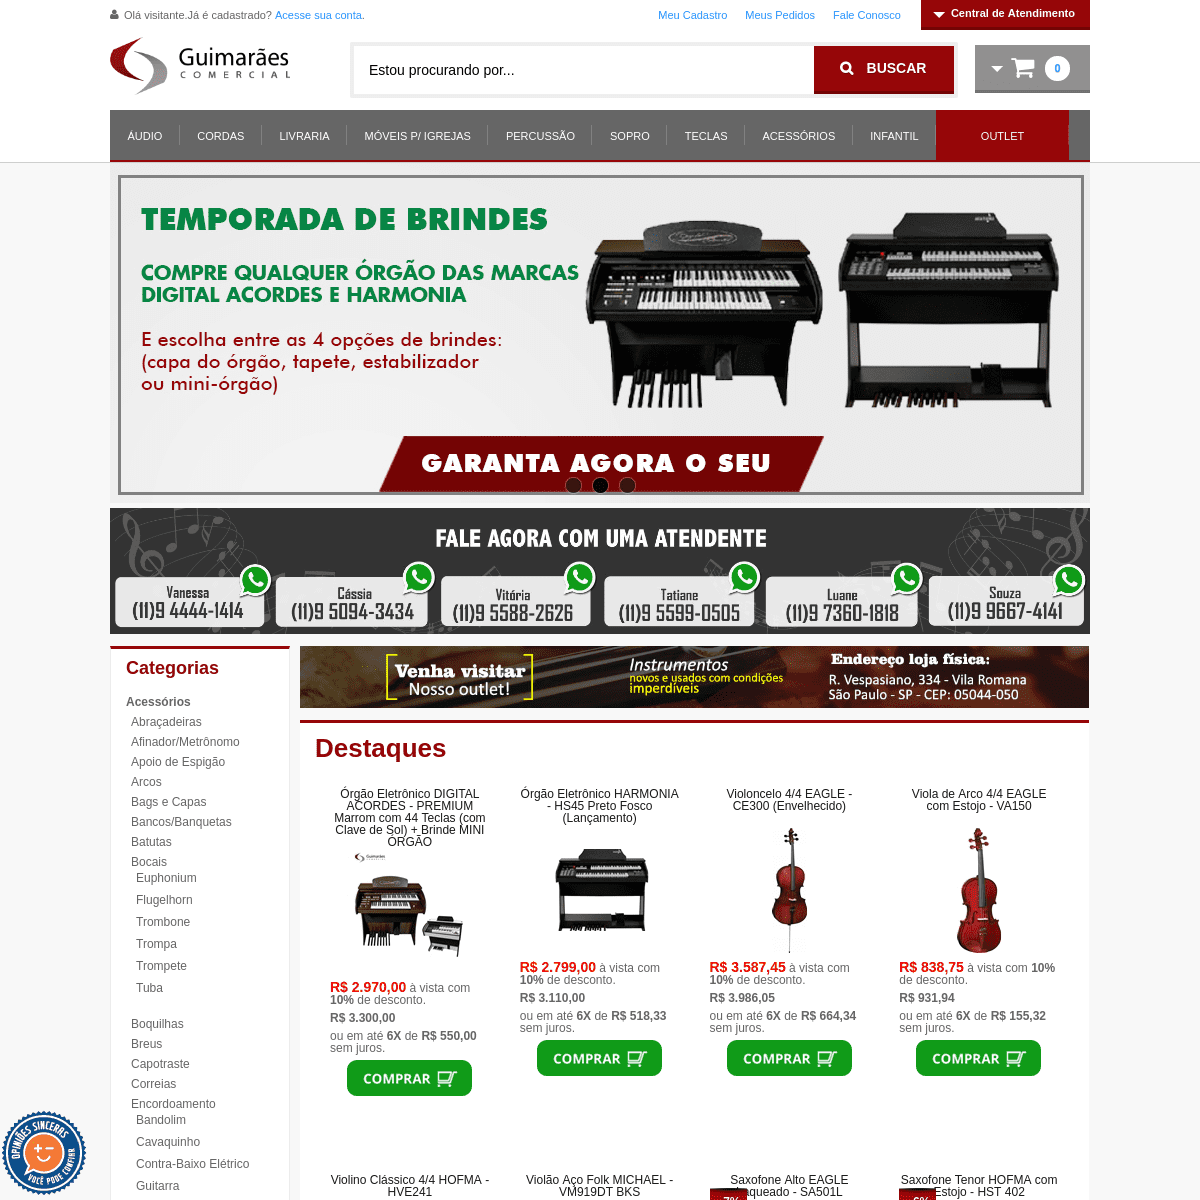 A complete backup of guimaraescomercial.com.br